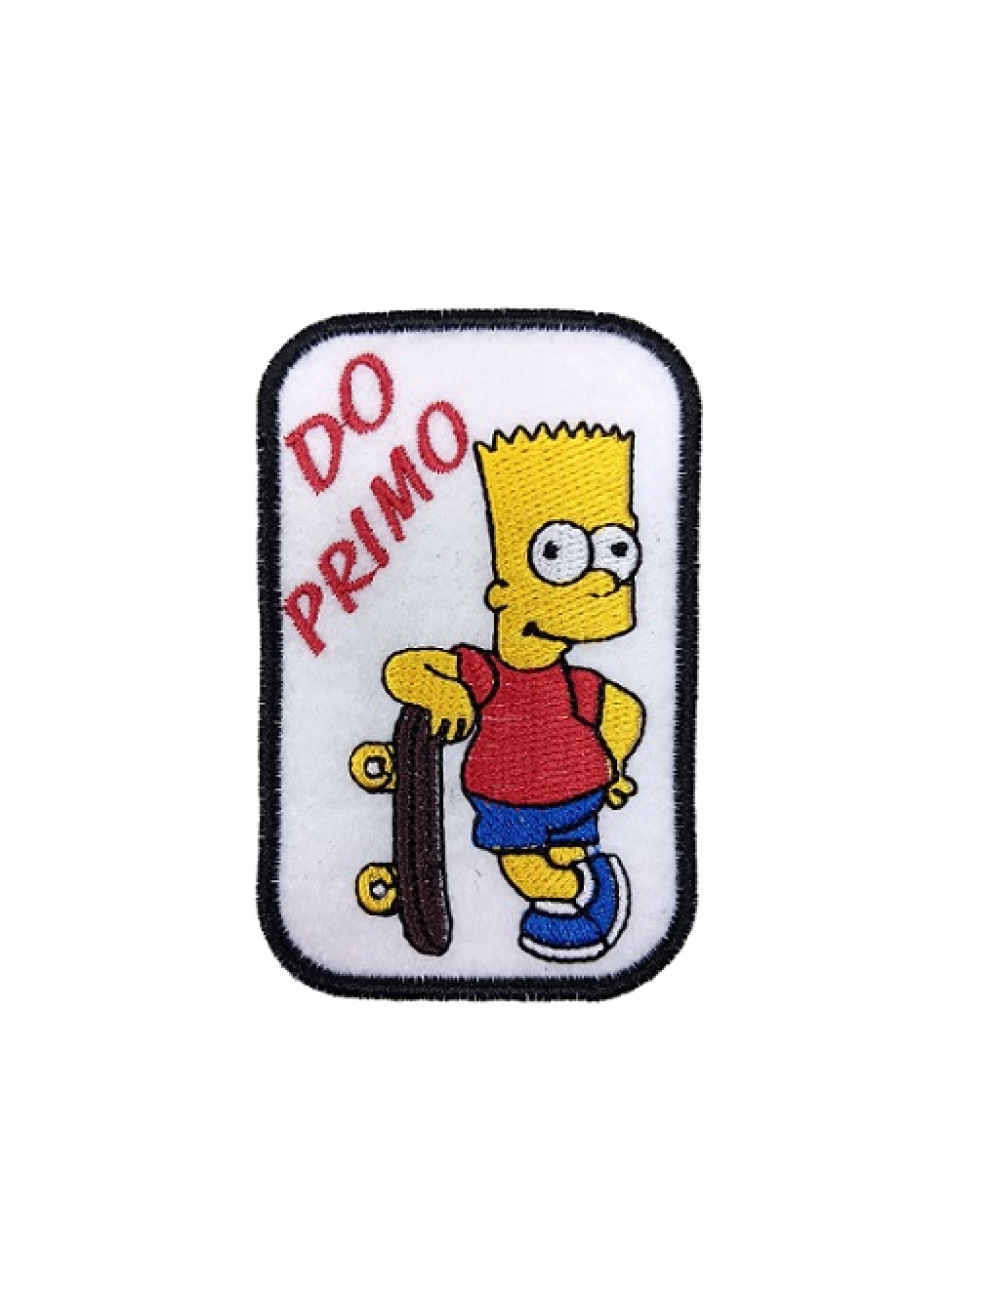 Do Primo (Bart Simpson)